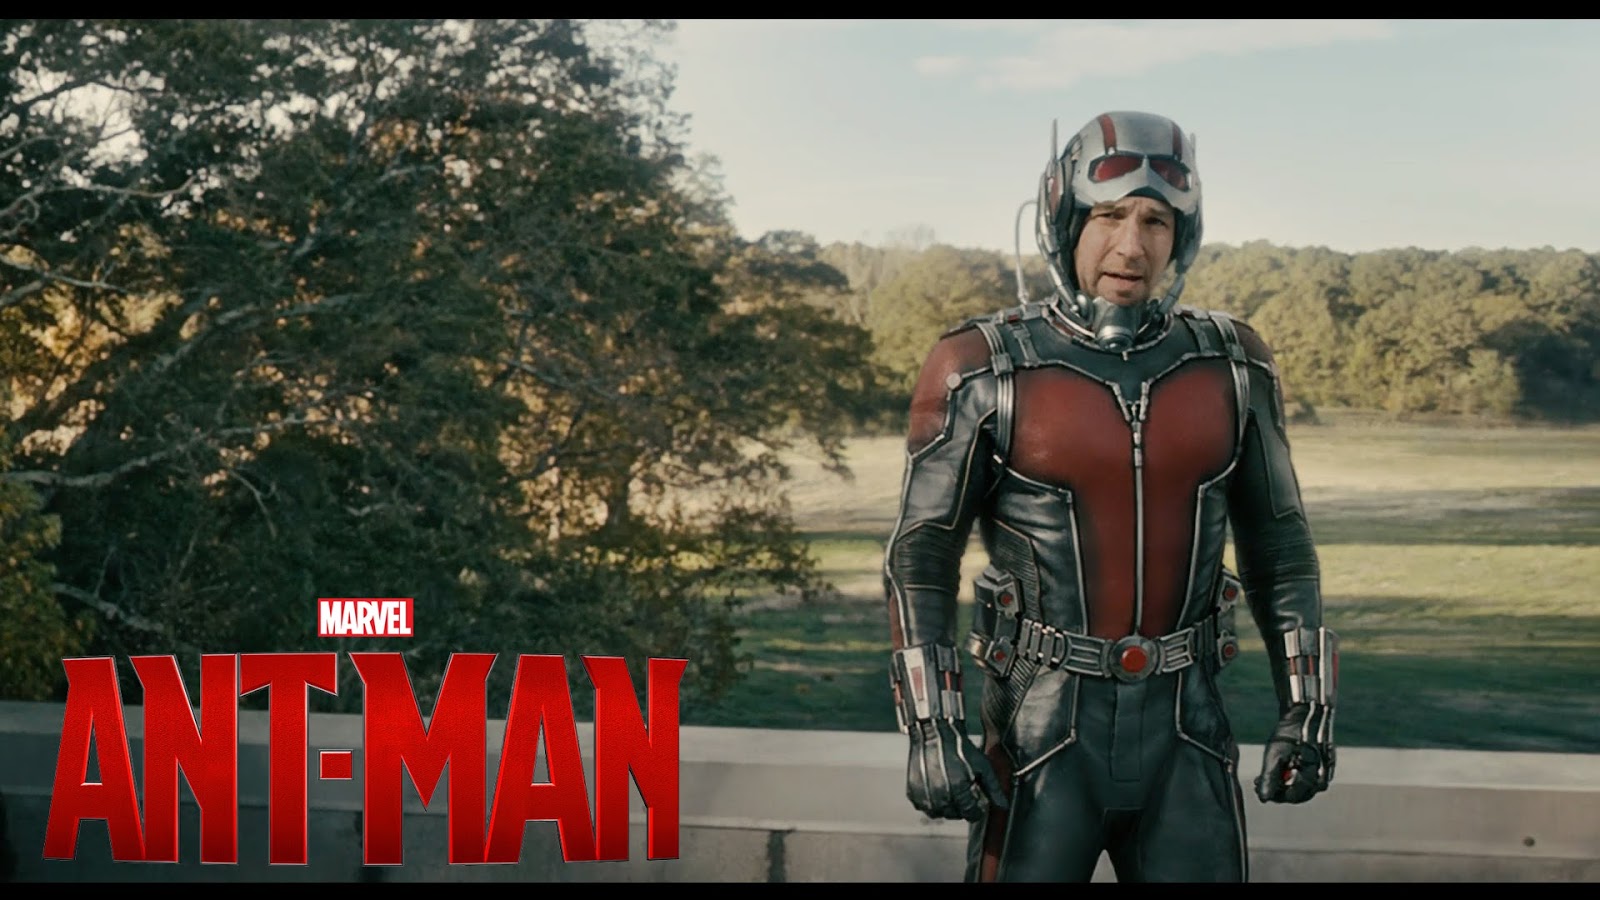 MOVIES: Ant-Man - News Roundup